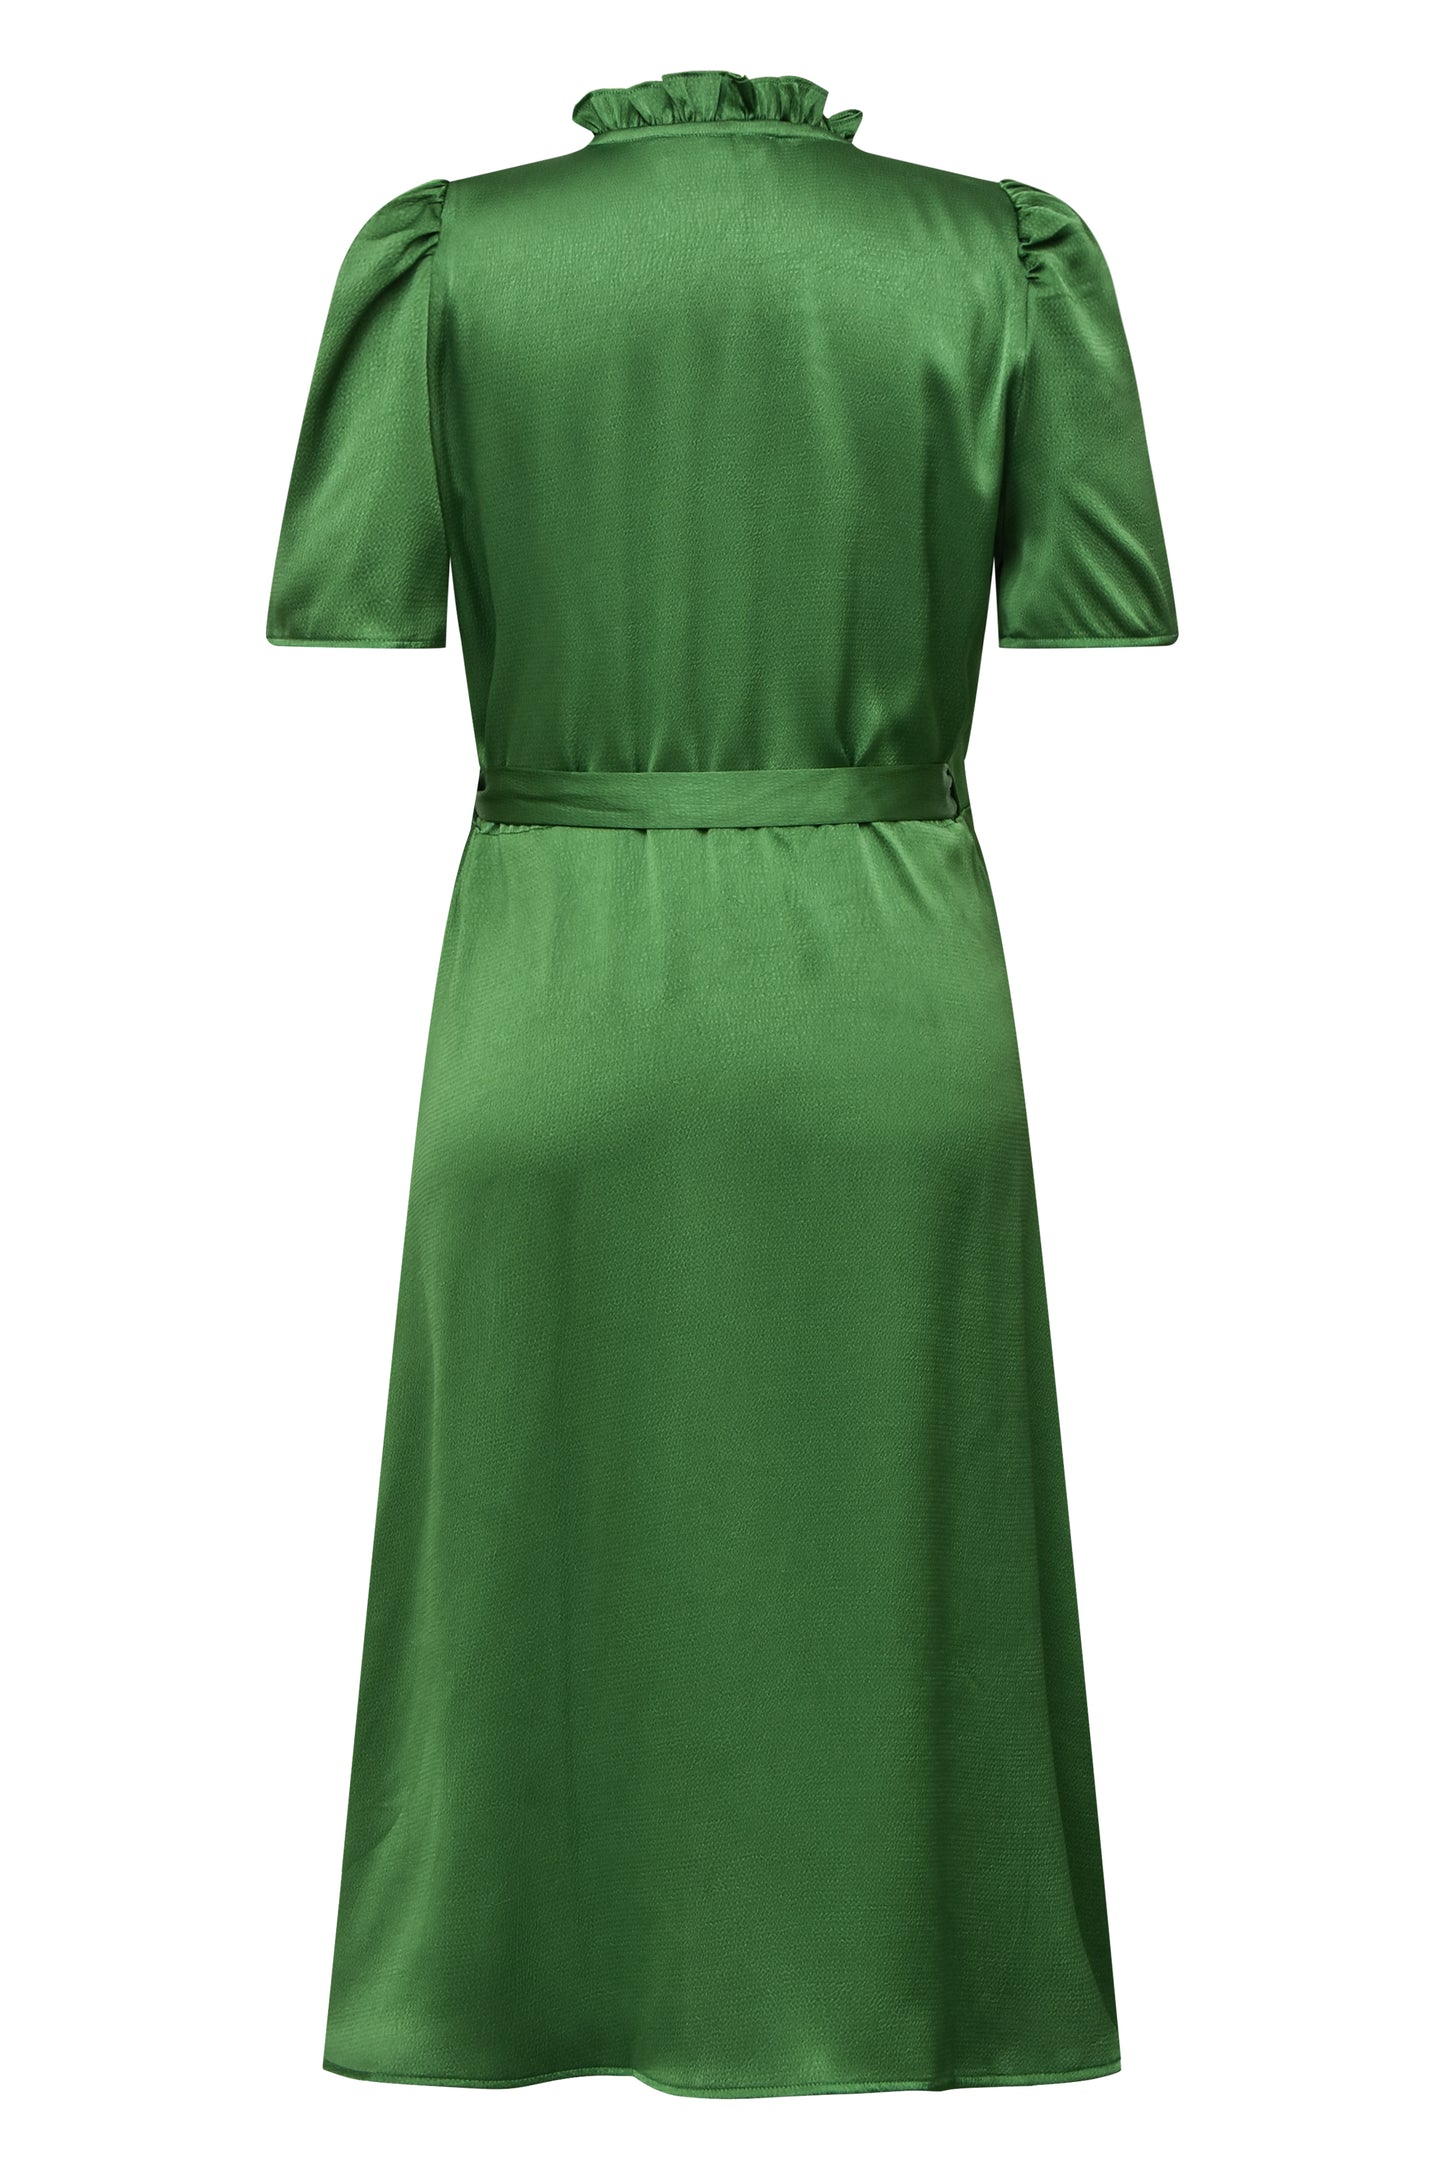 A-VIEW - Peony medi dress - Grøn